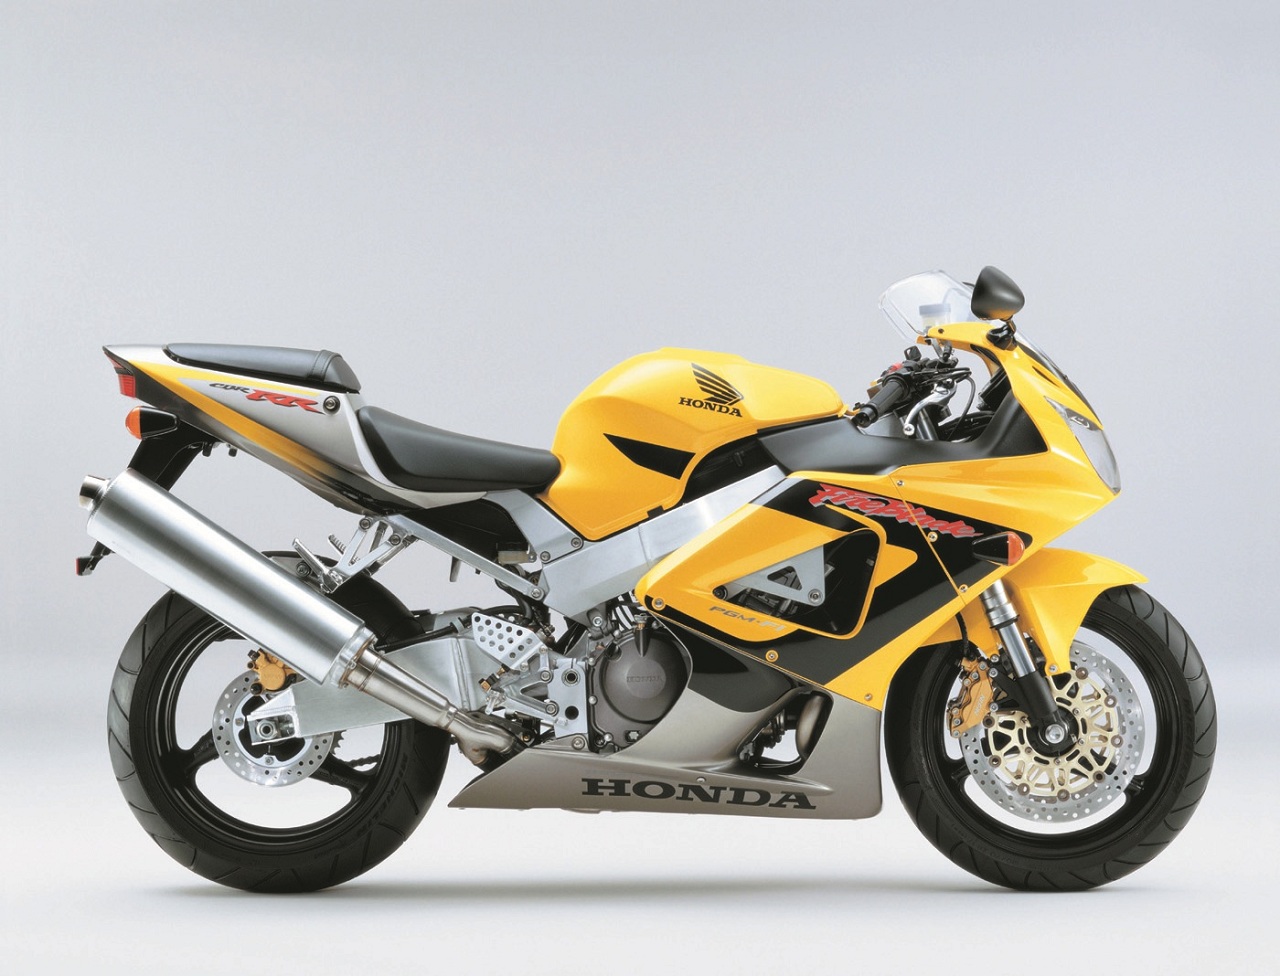 Honda cbr 900 rr fireblade — спортивный мотоцикл старой закалки